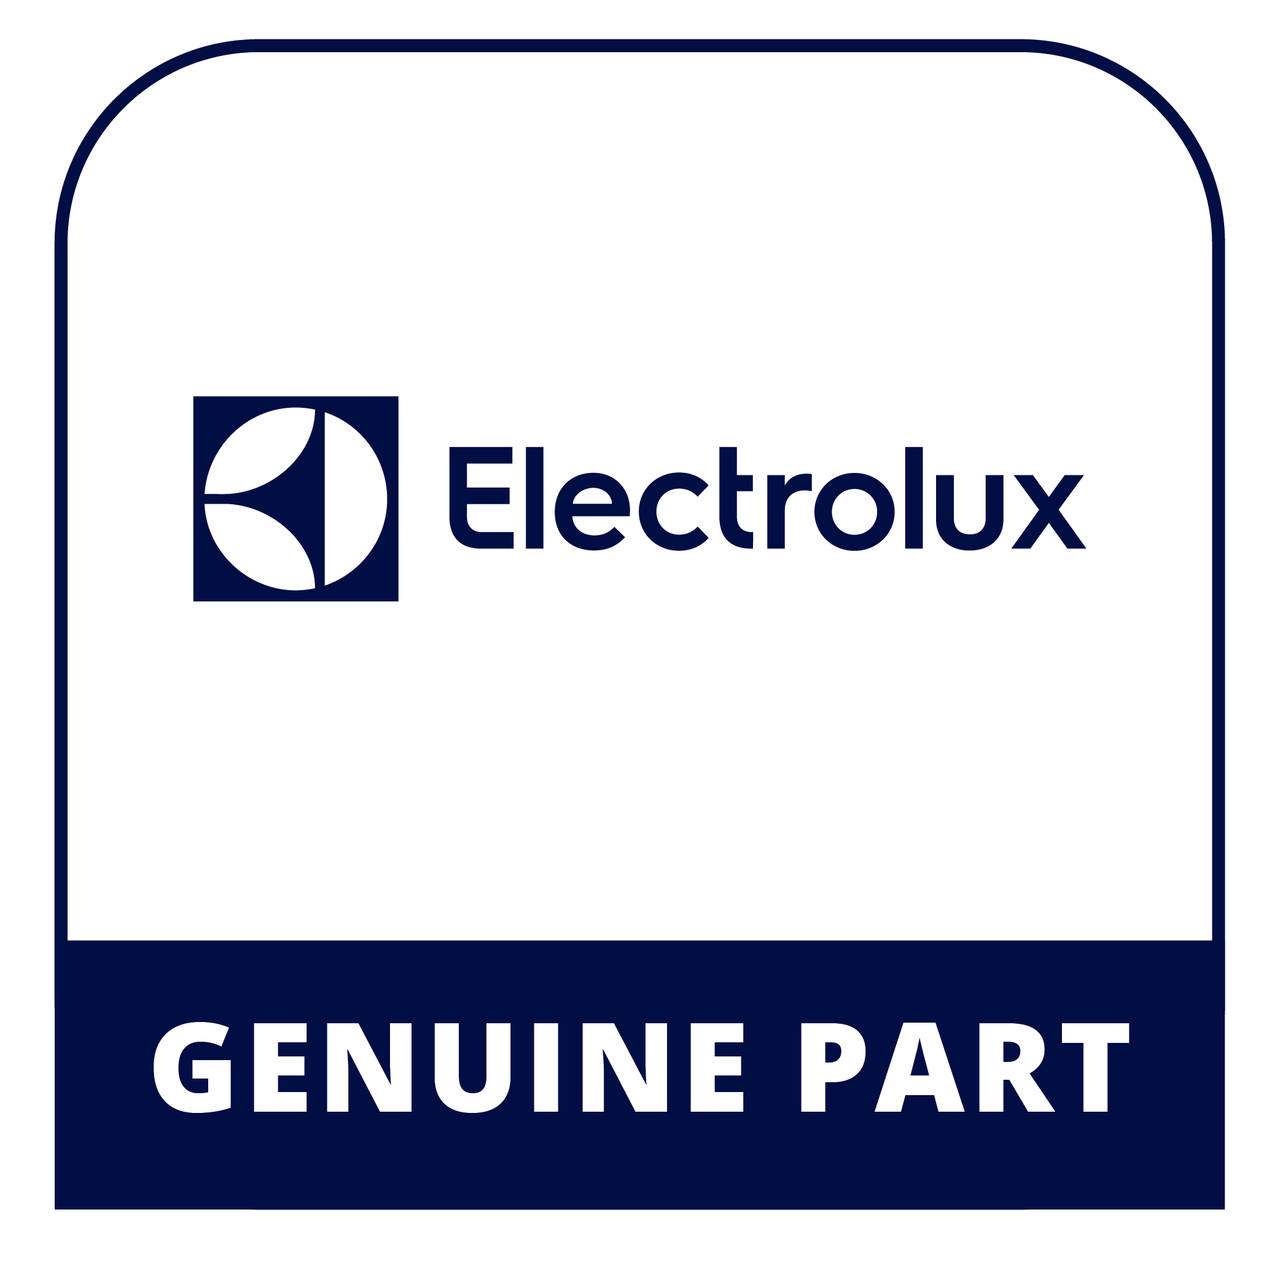 Frigidaire - Electrolux 5303918603 - Kit Water Tube - Genuine Electrolux Part